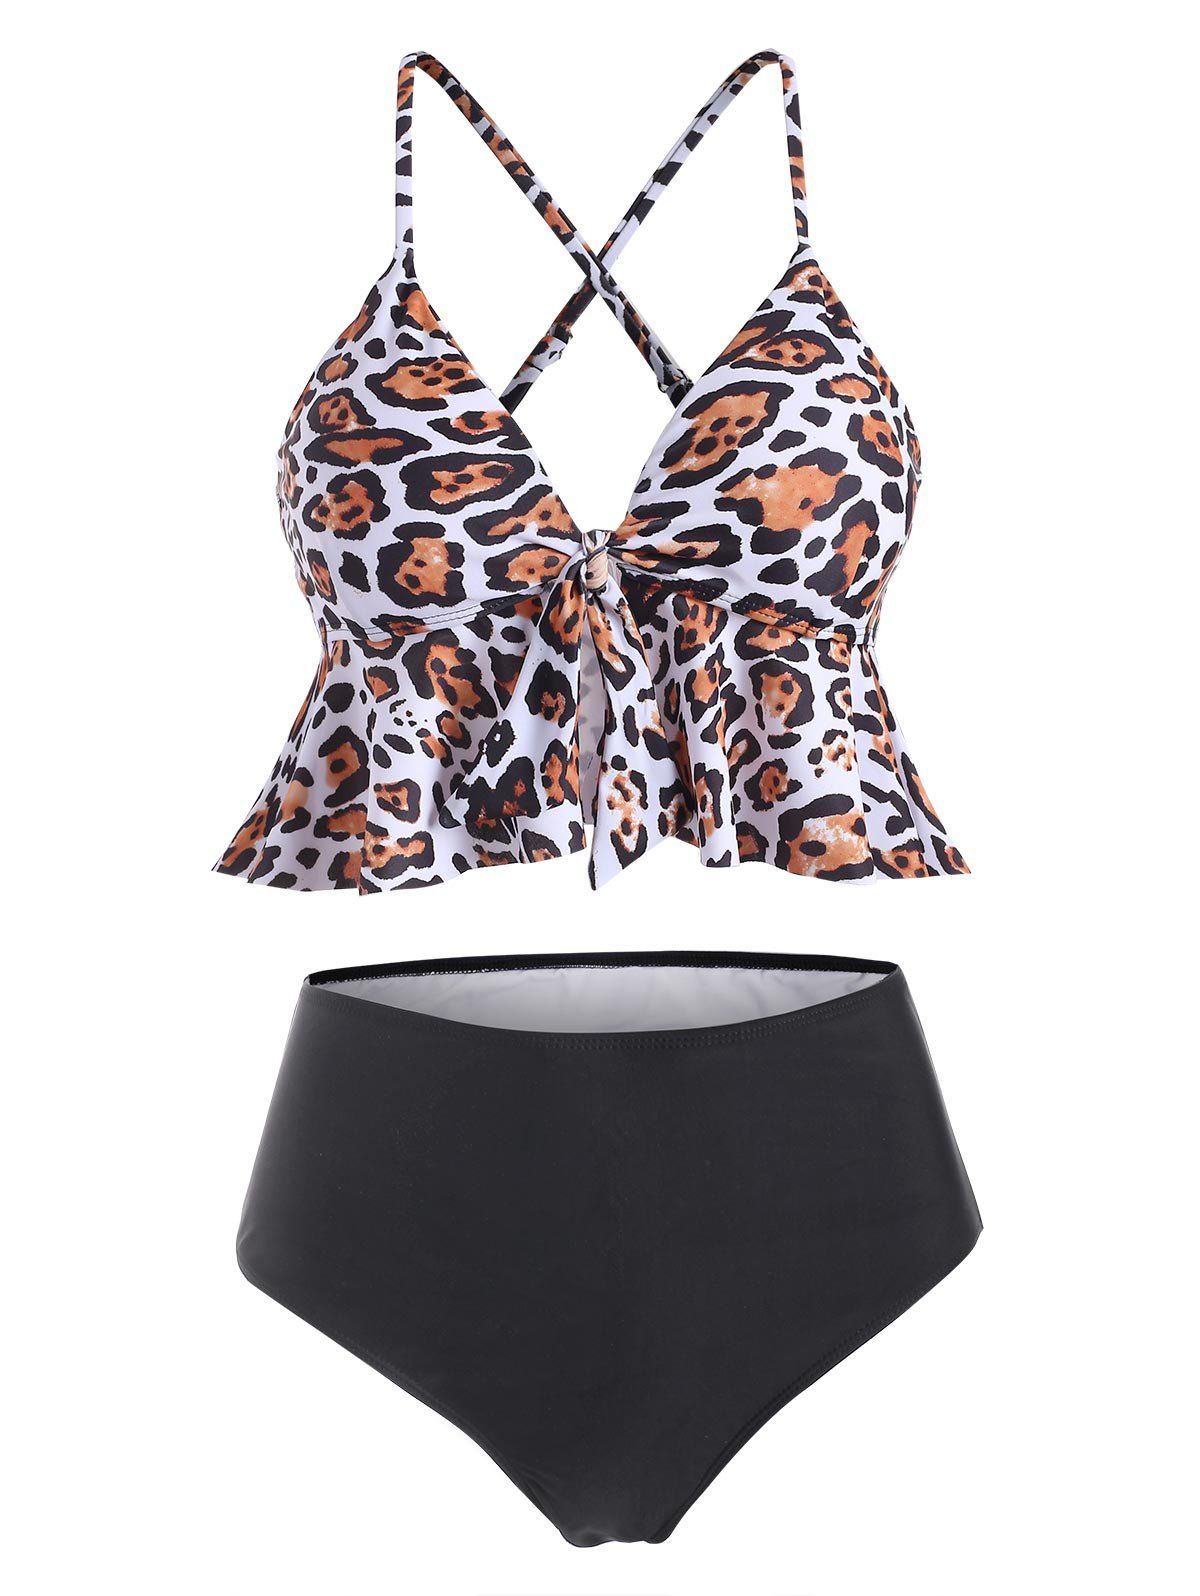 Leopard Knotted Criss Cross Flounce Bikini Swimsuit - LEOPARD S